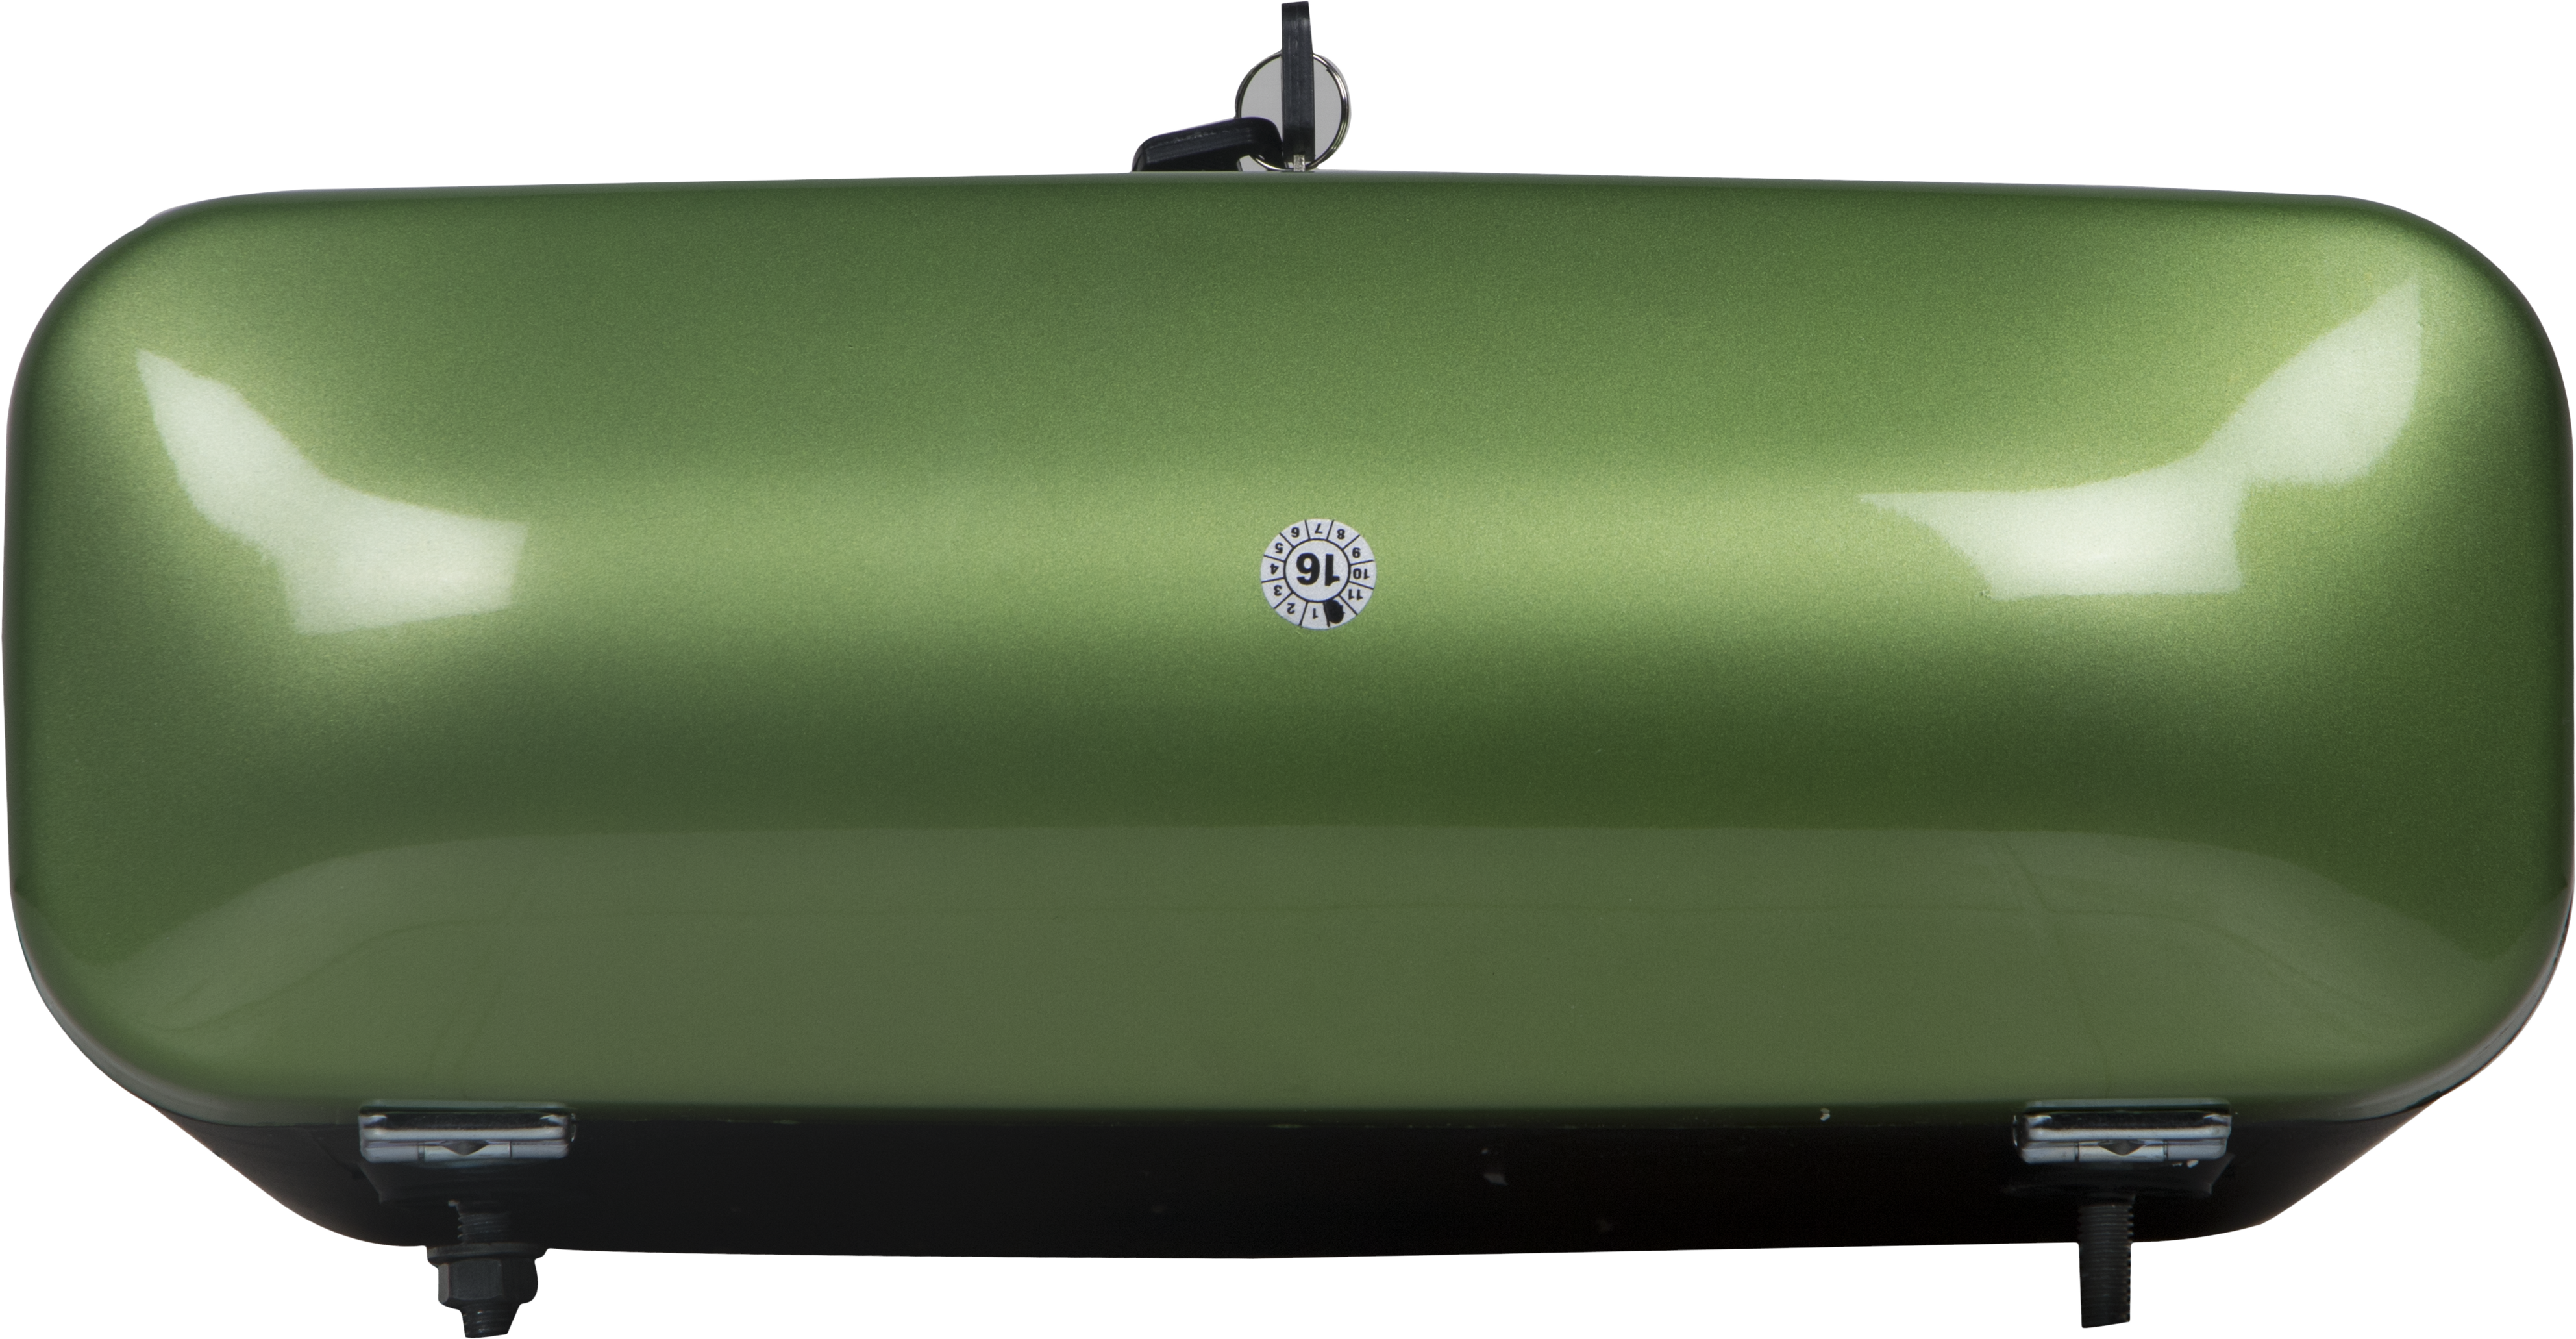 Steelbird Pannier Box SB-509 Green